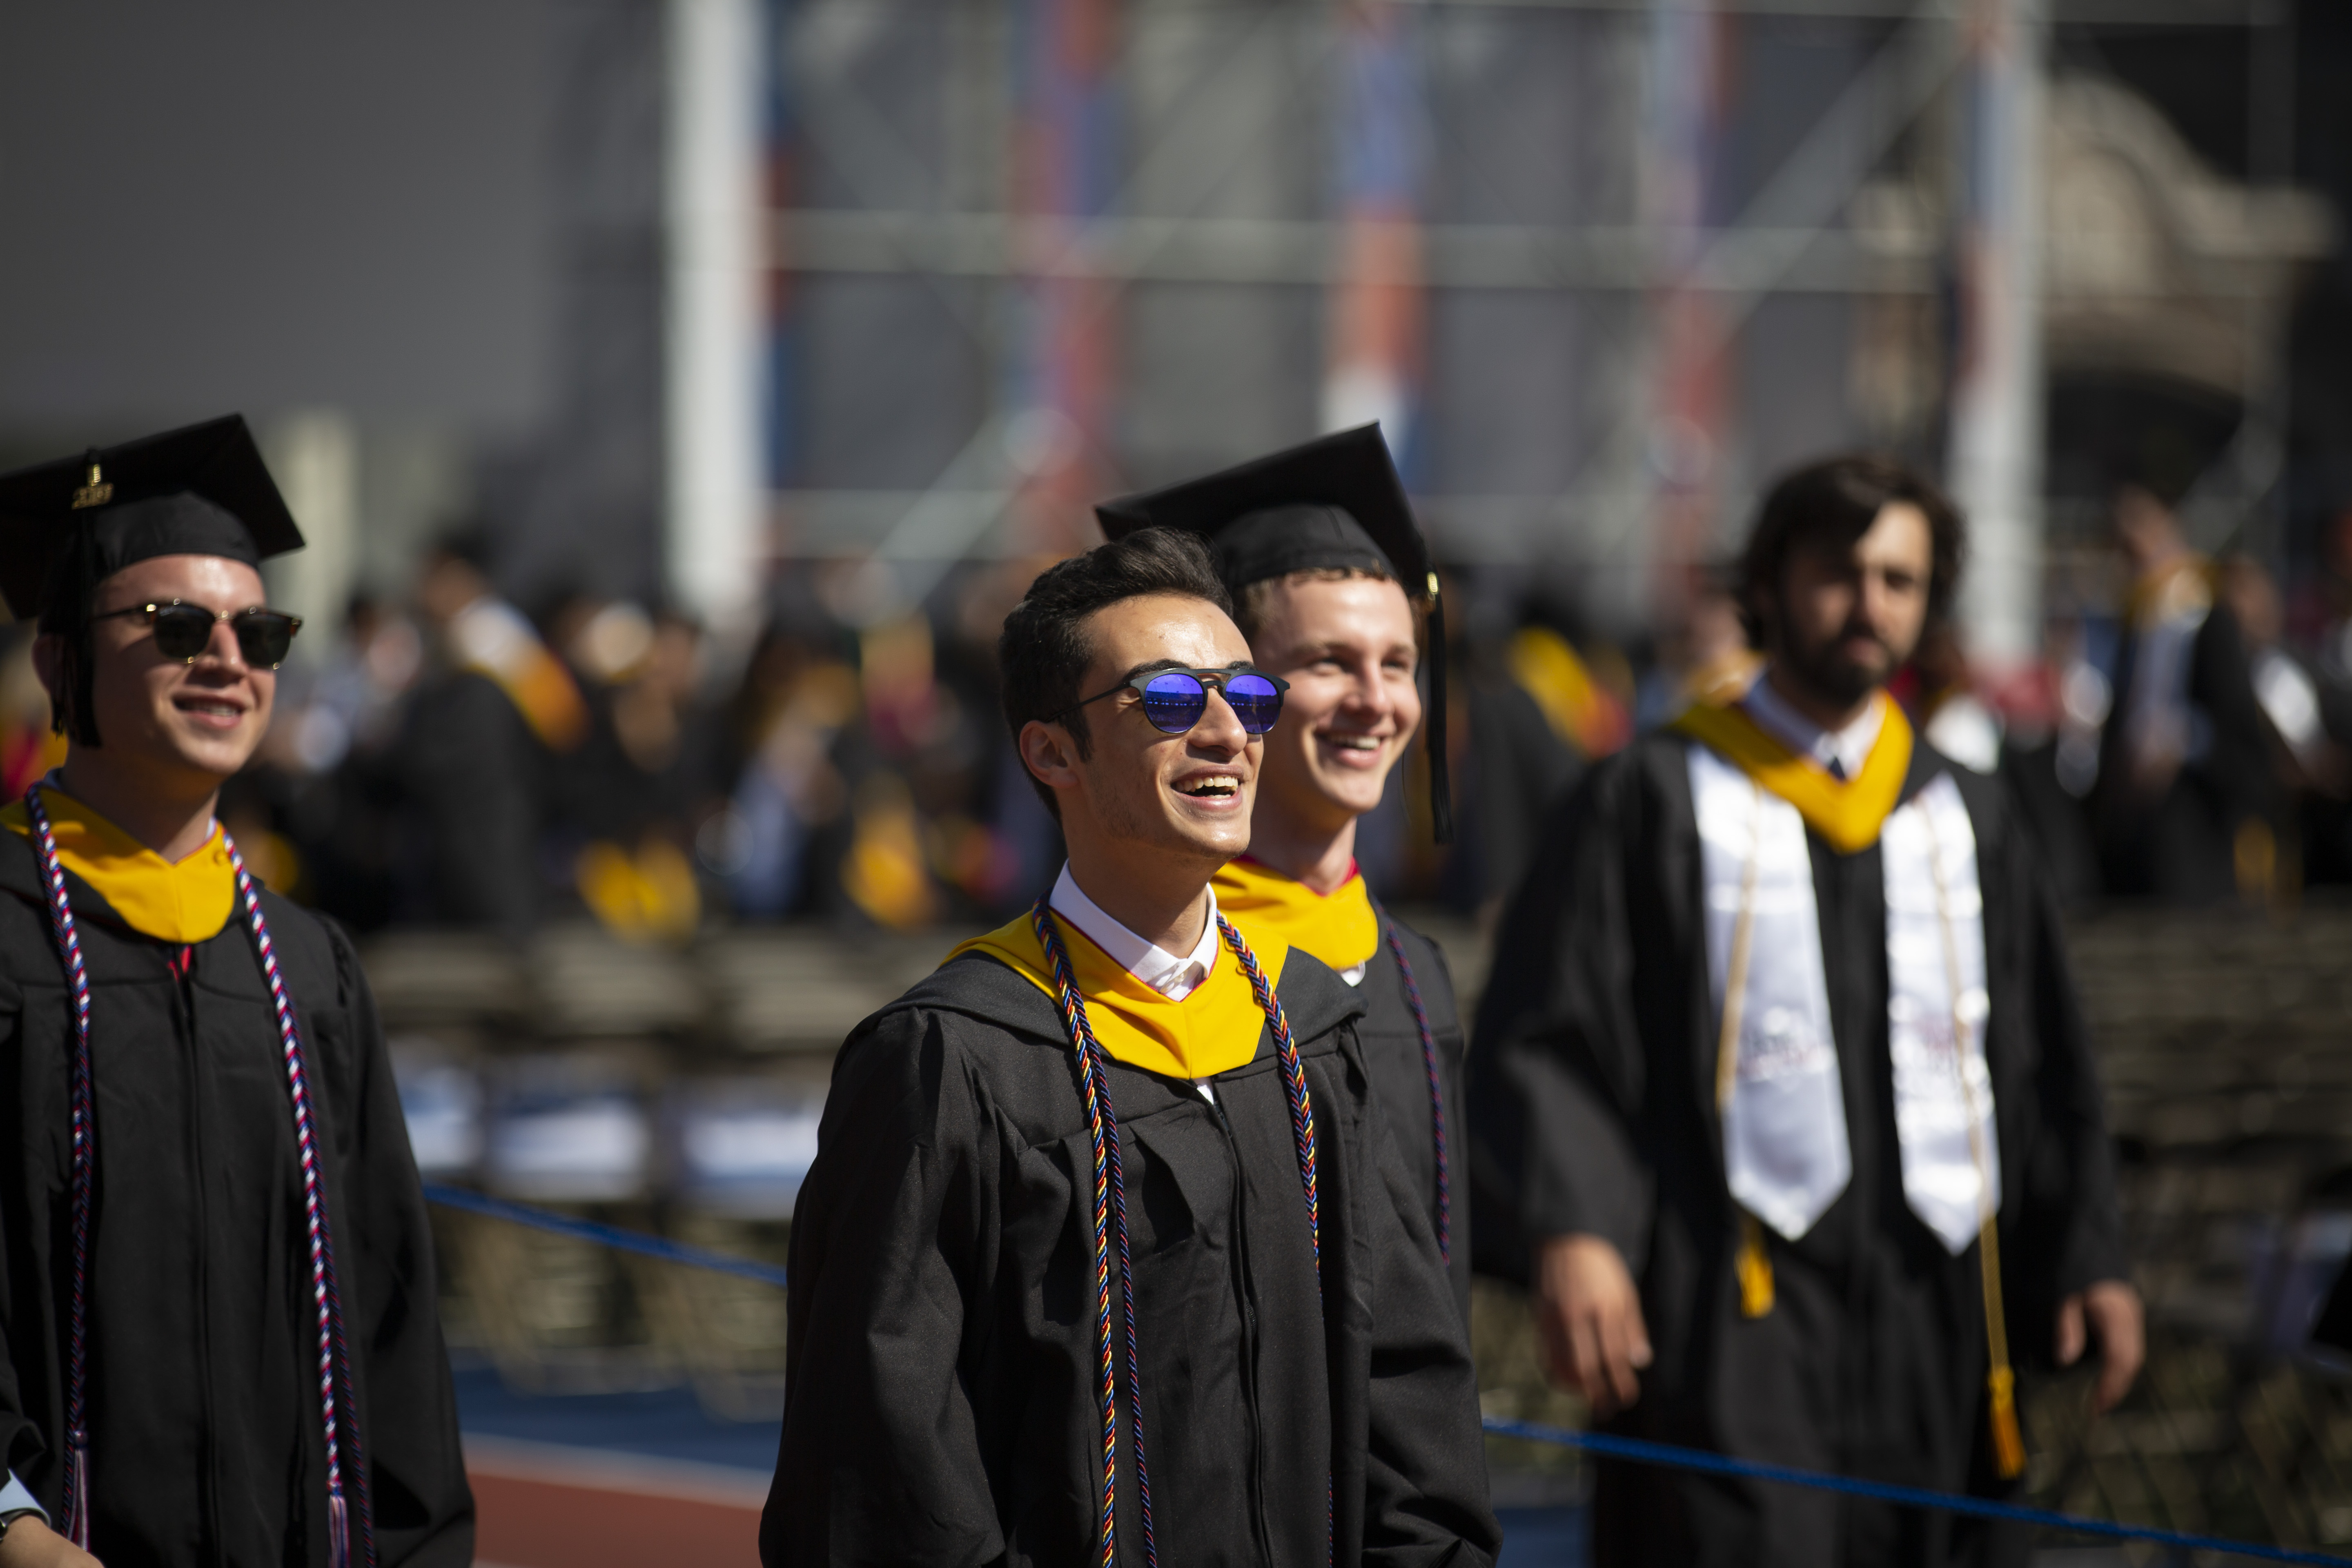 Graduating students walking into stadium, smiling